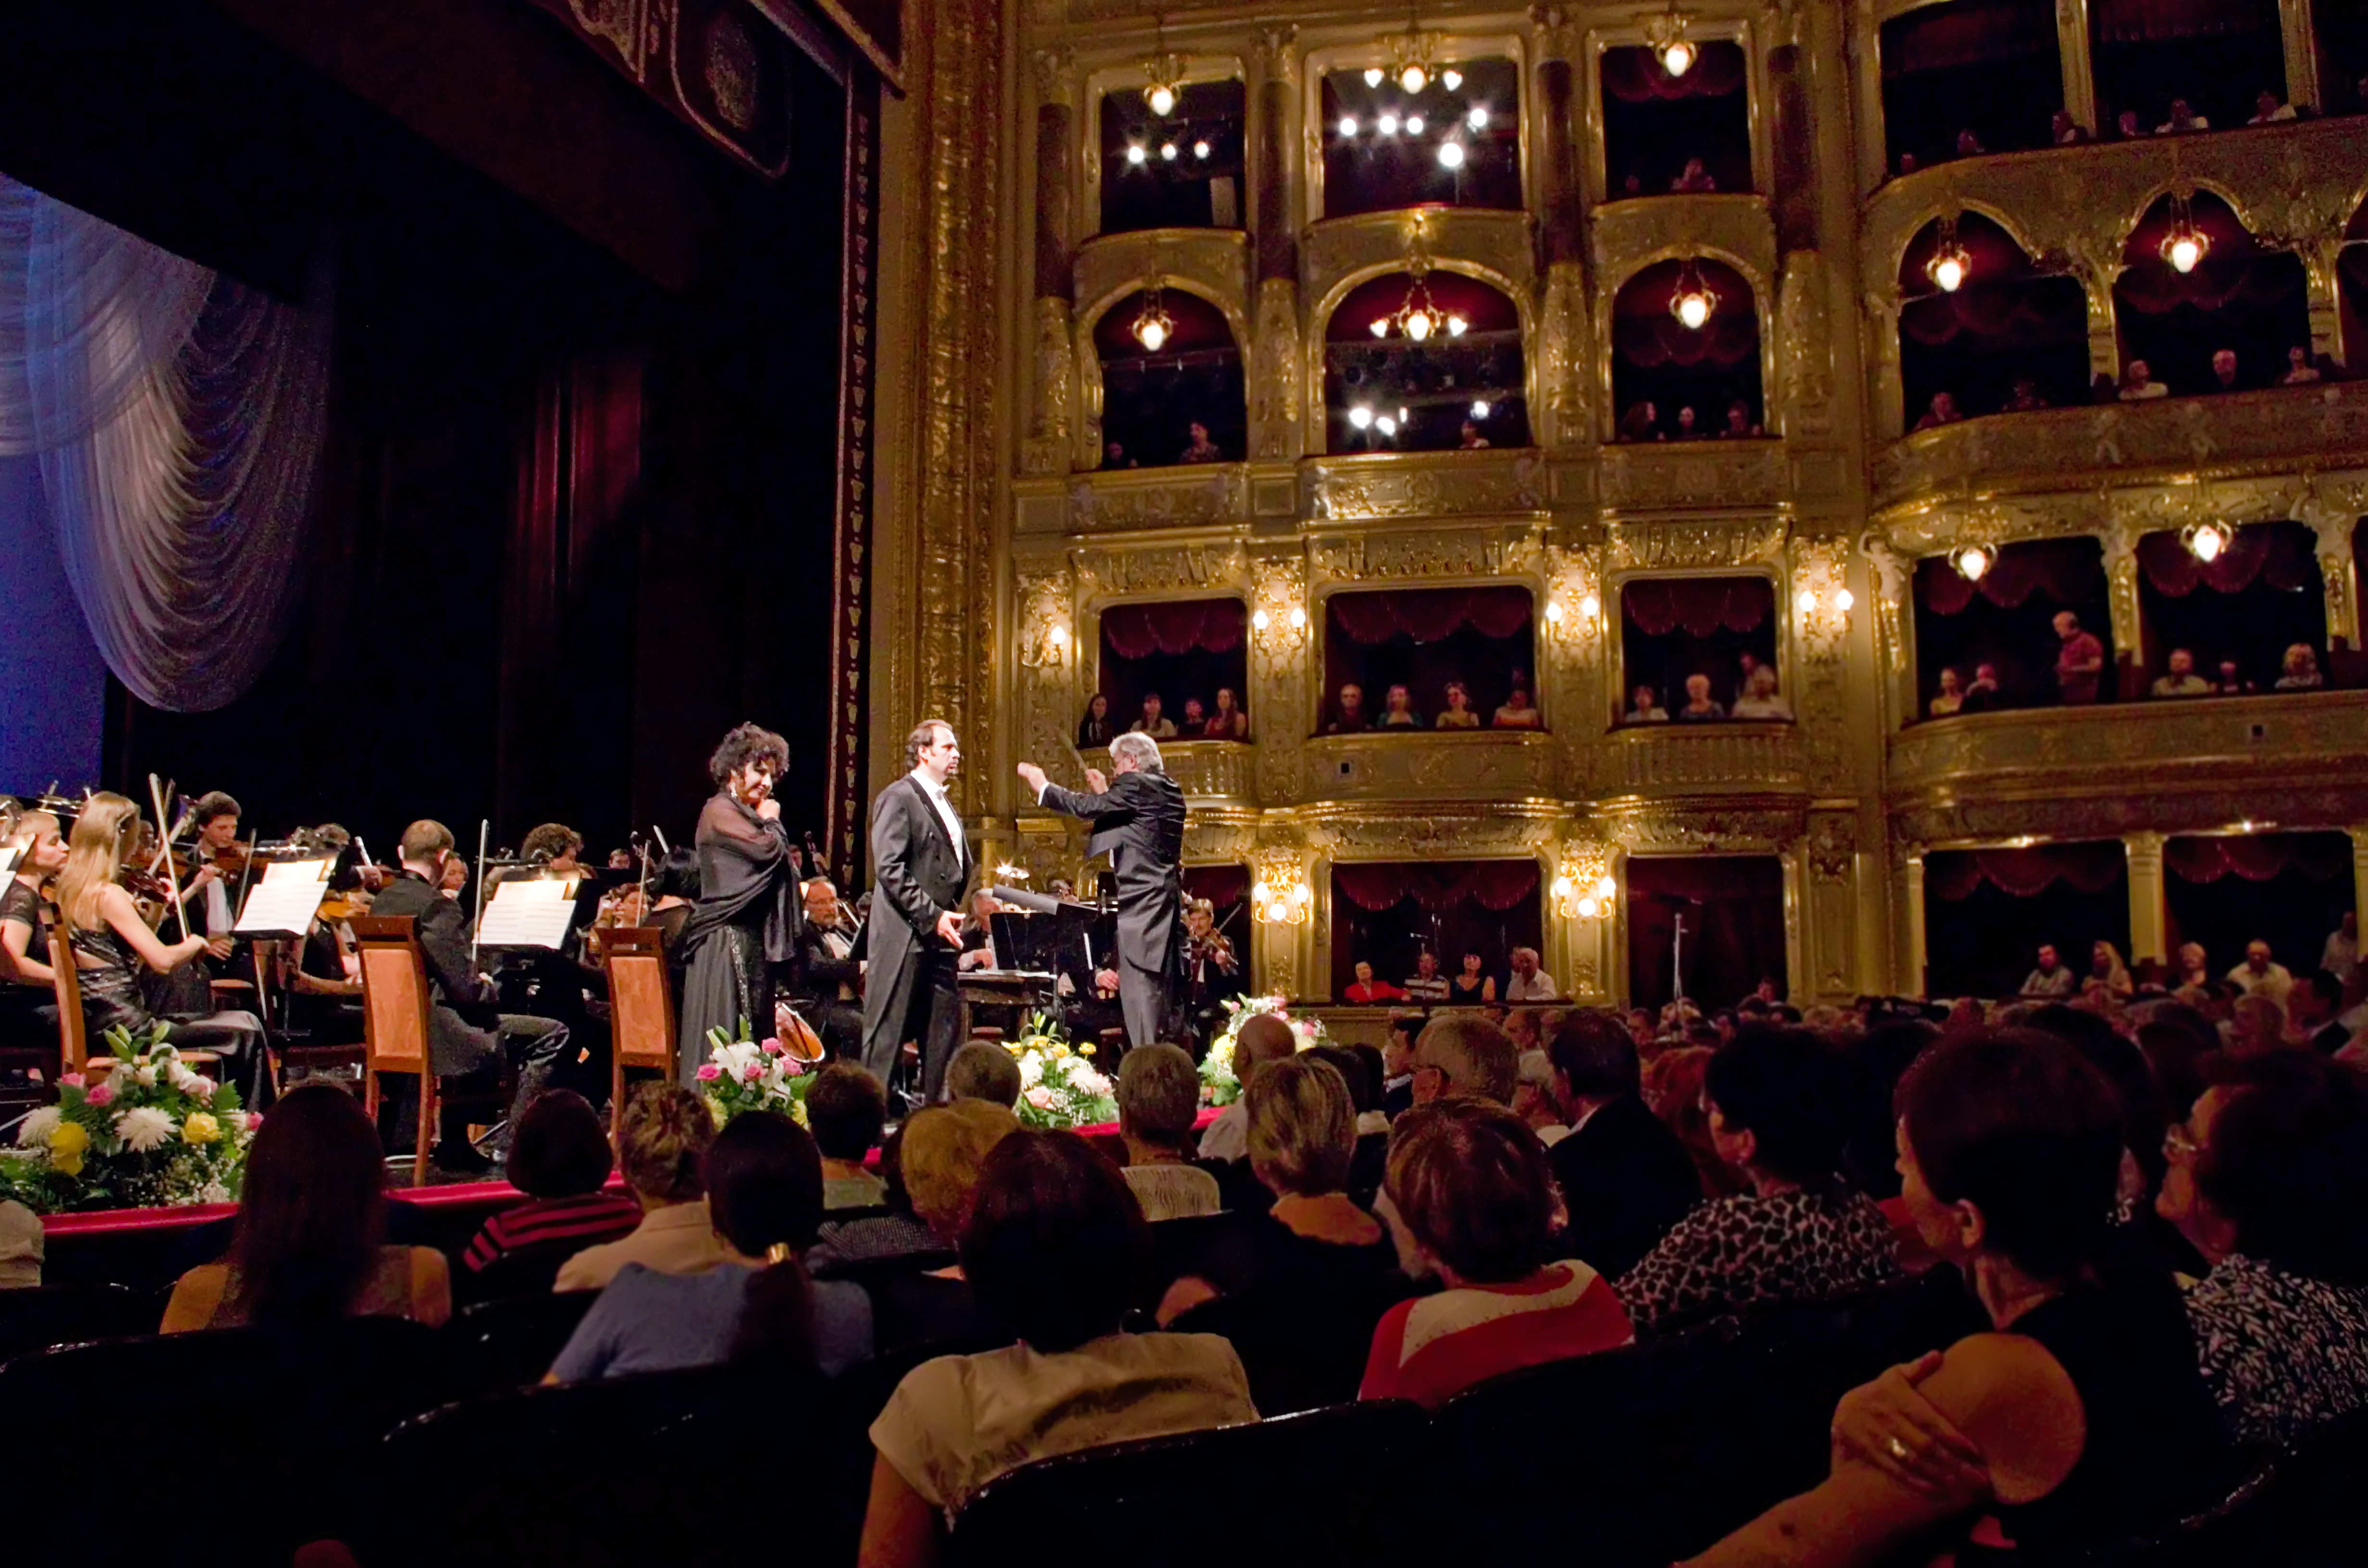 Opera hall | Source: Shutterstock